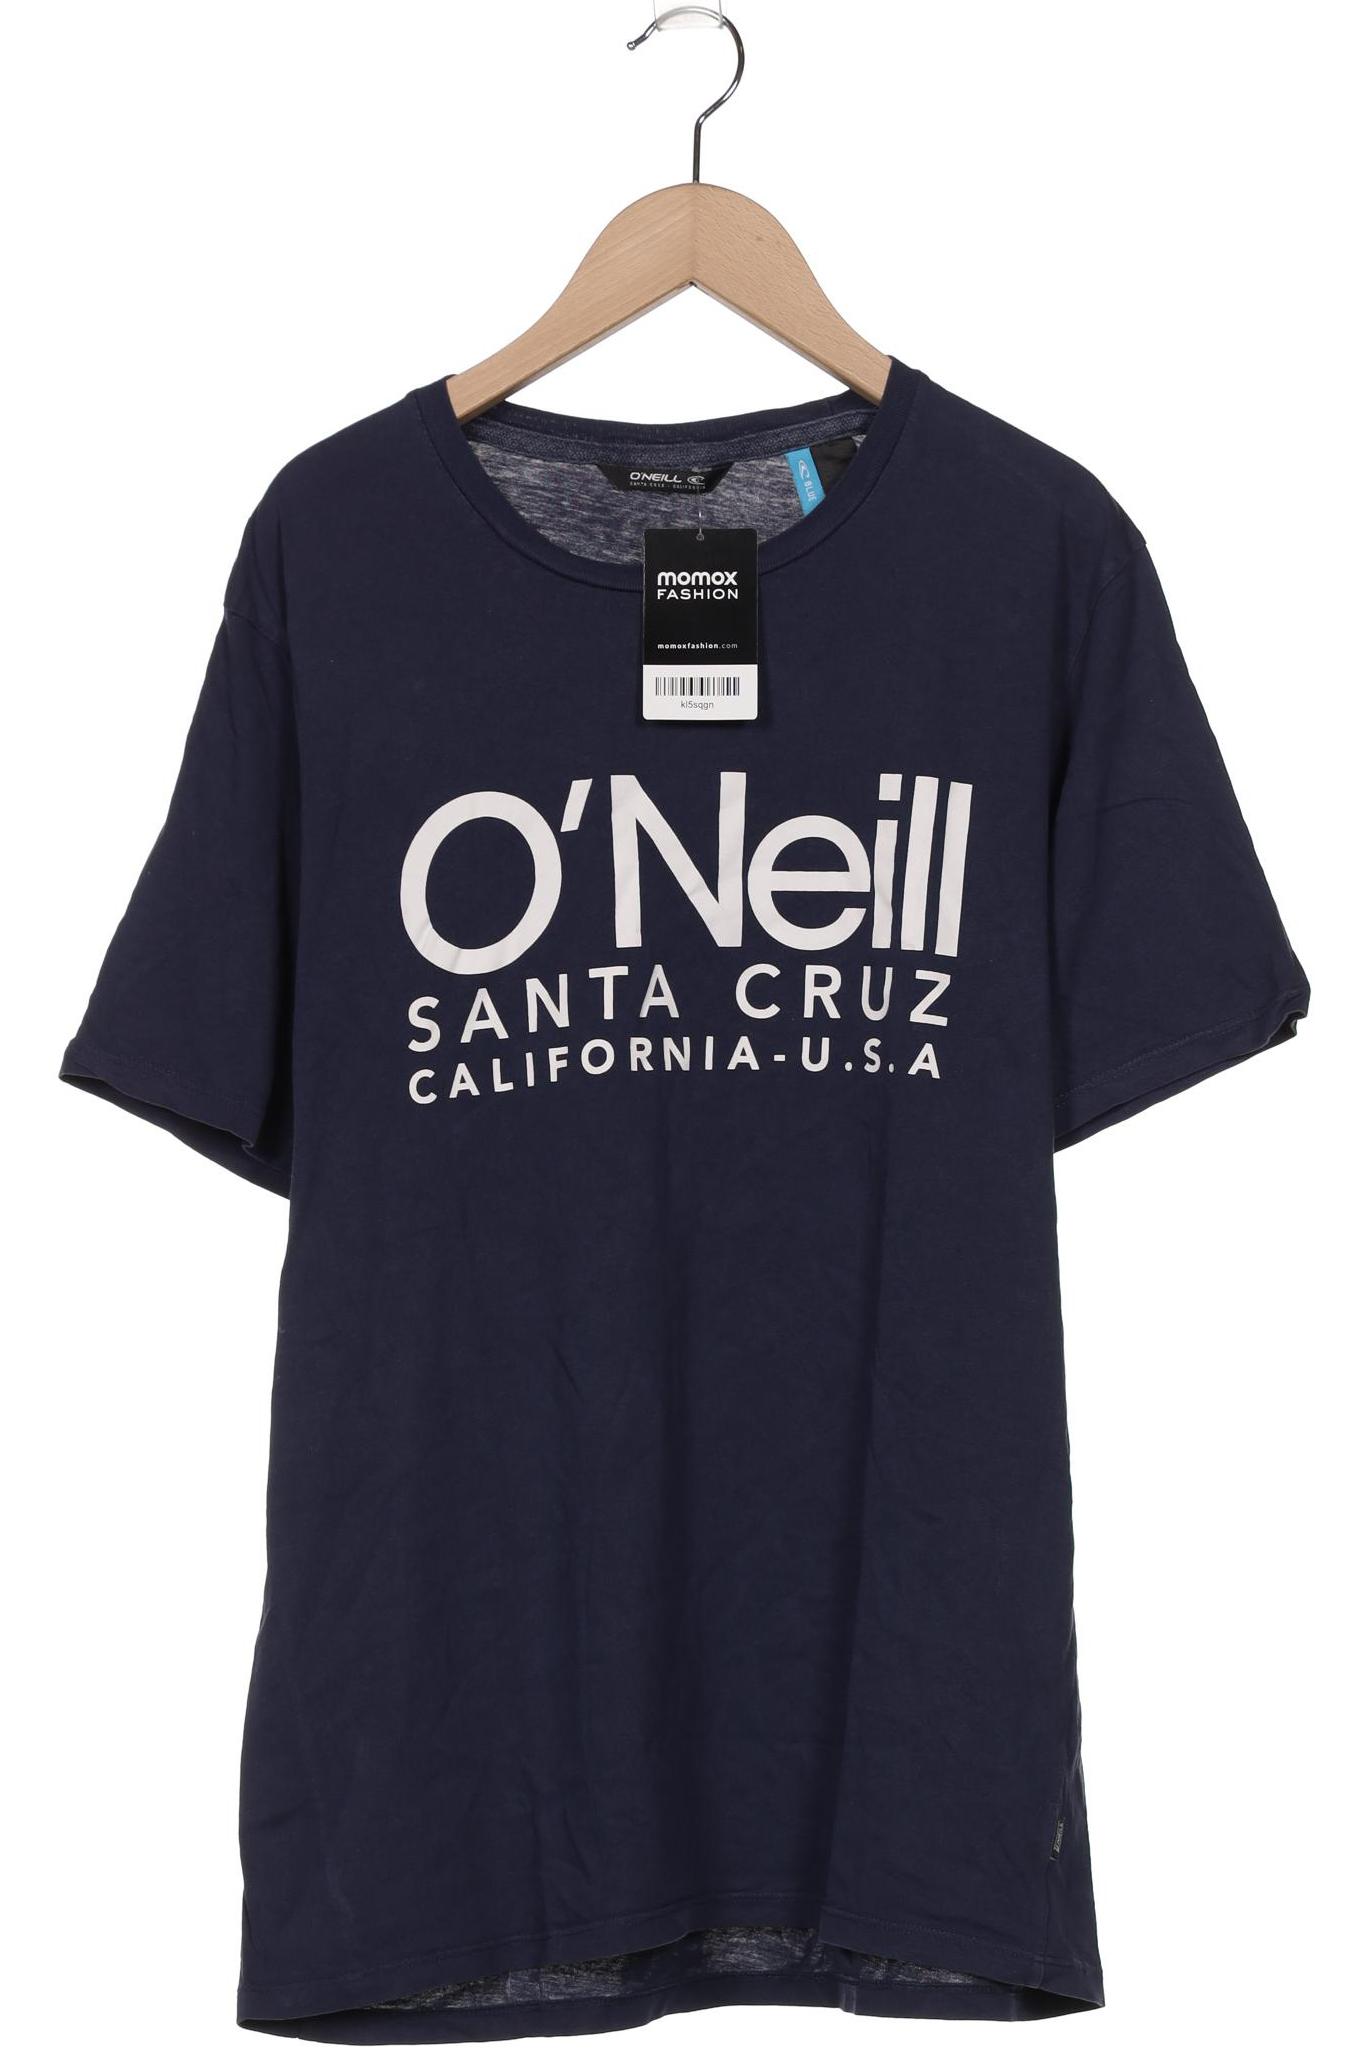 O Neill Herren T-Shirt, marineblau, Gr. 48 von O Neill